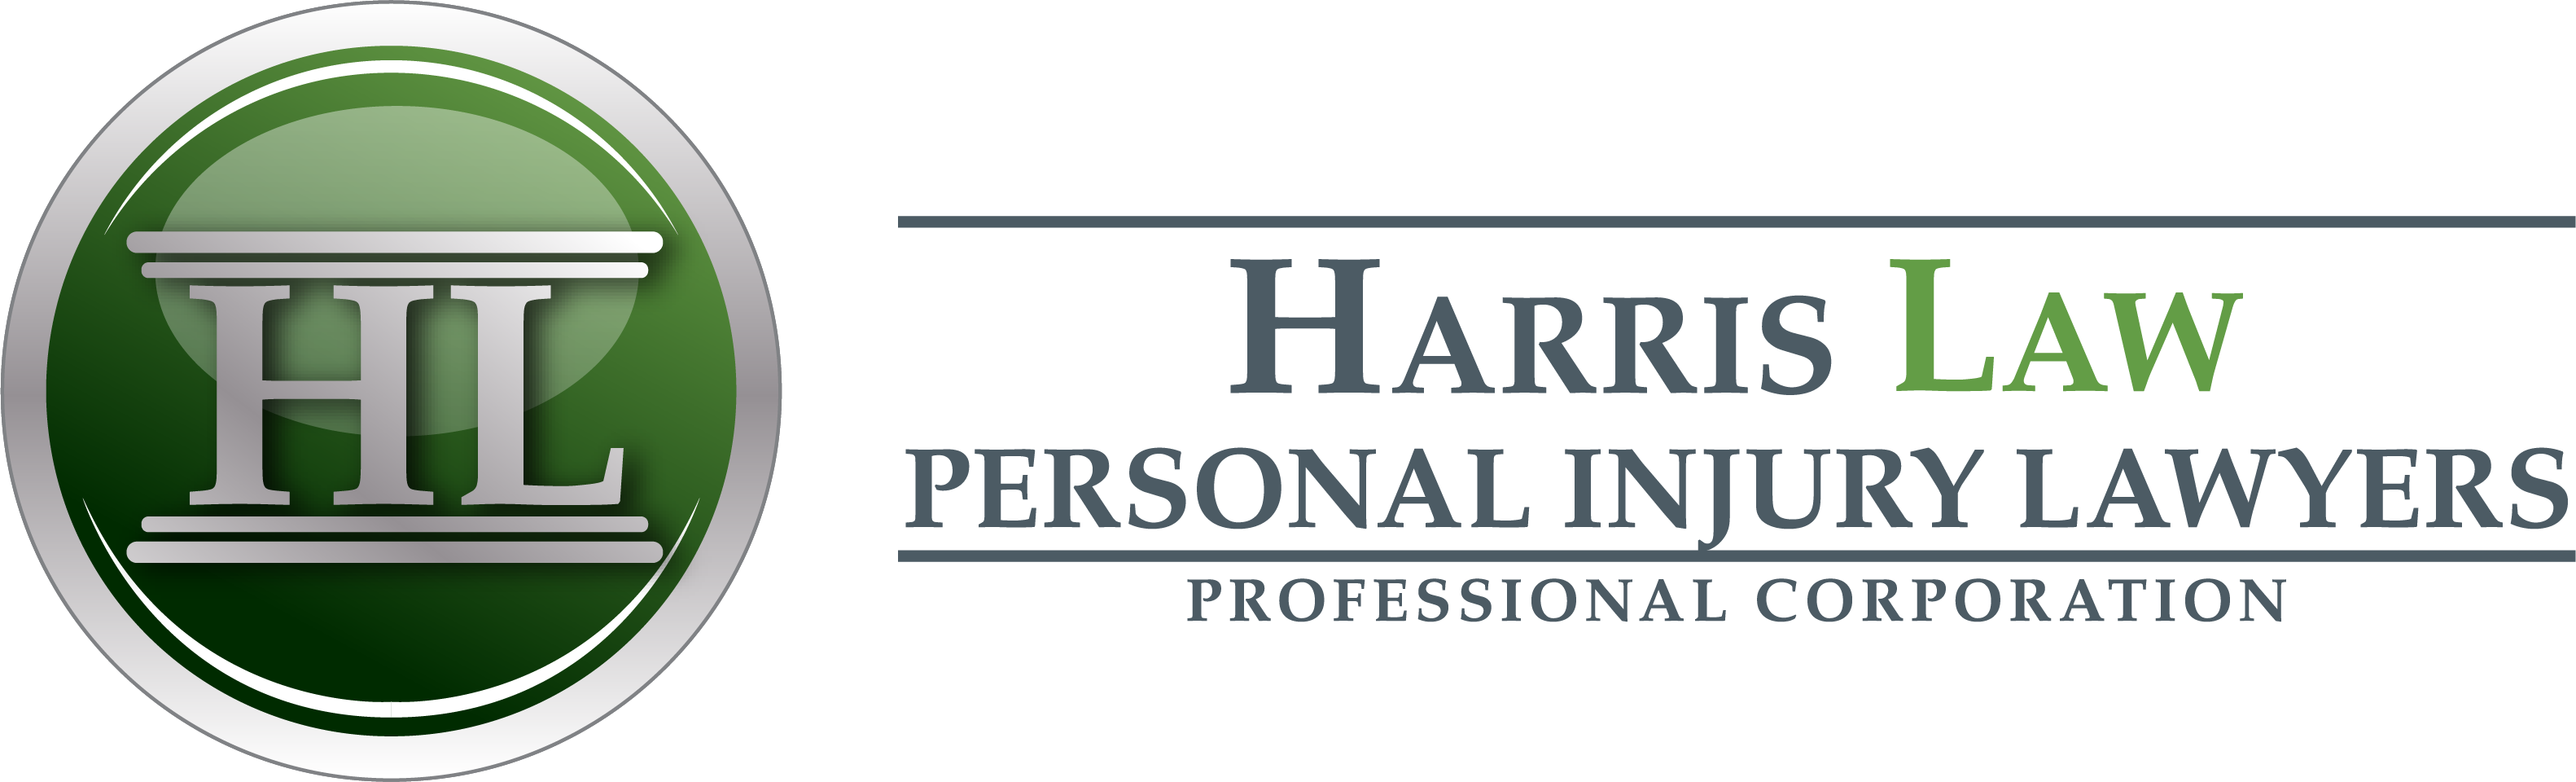 Harris Law Personal Injury Lawyers